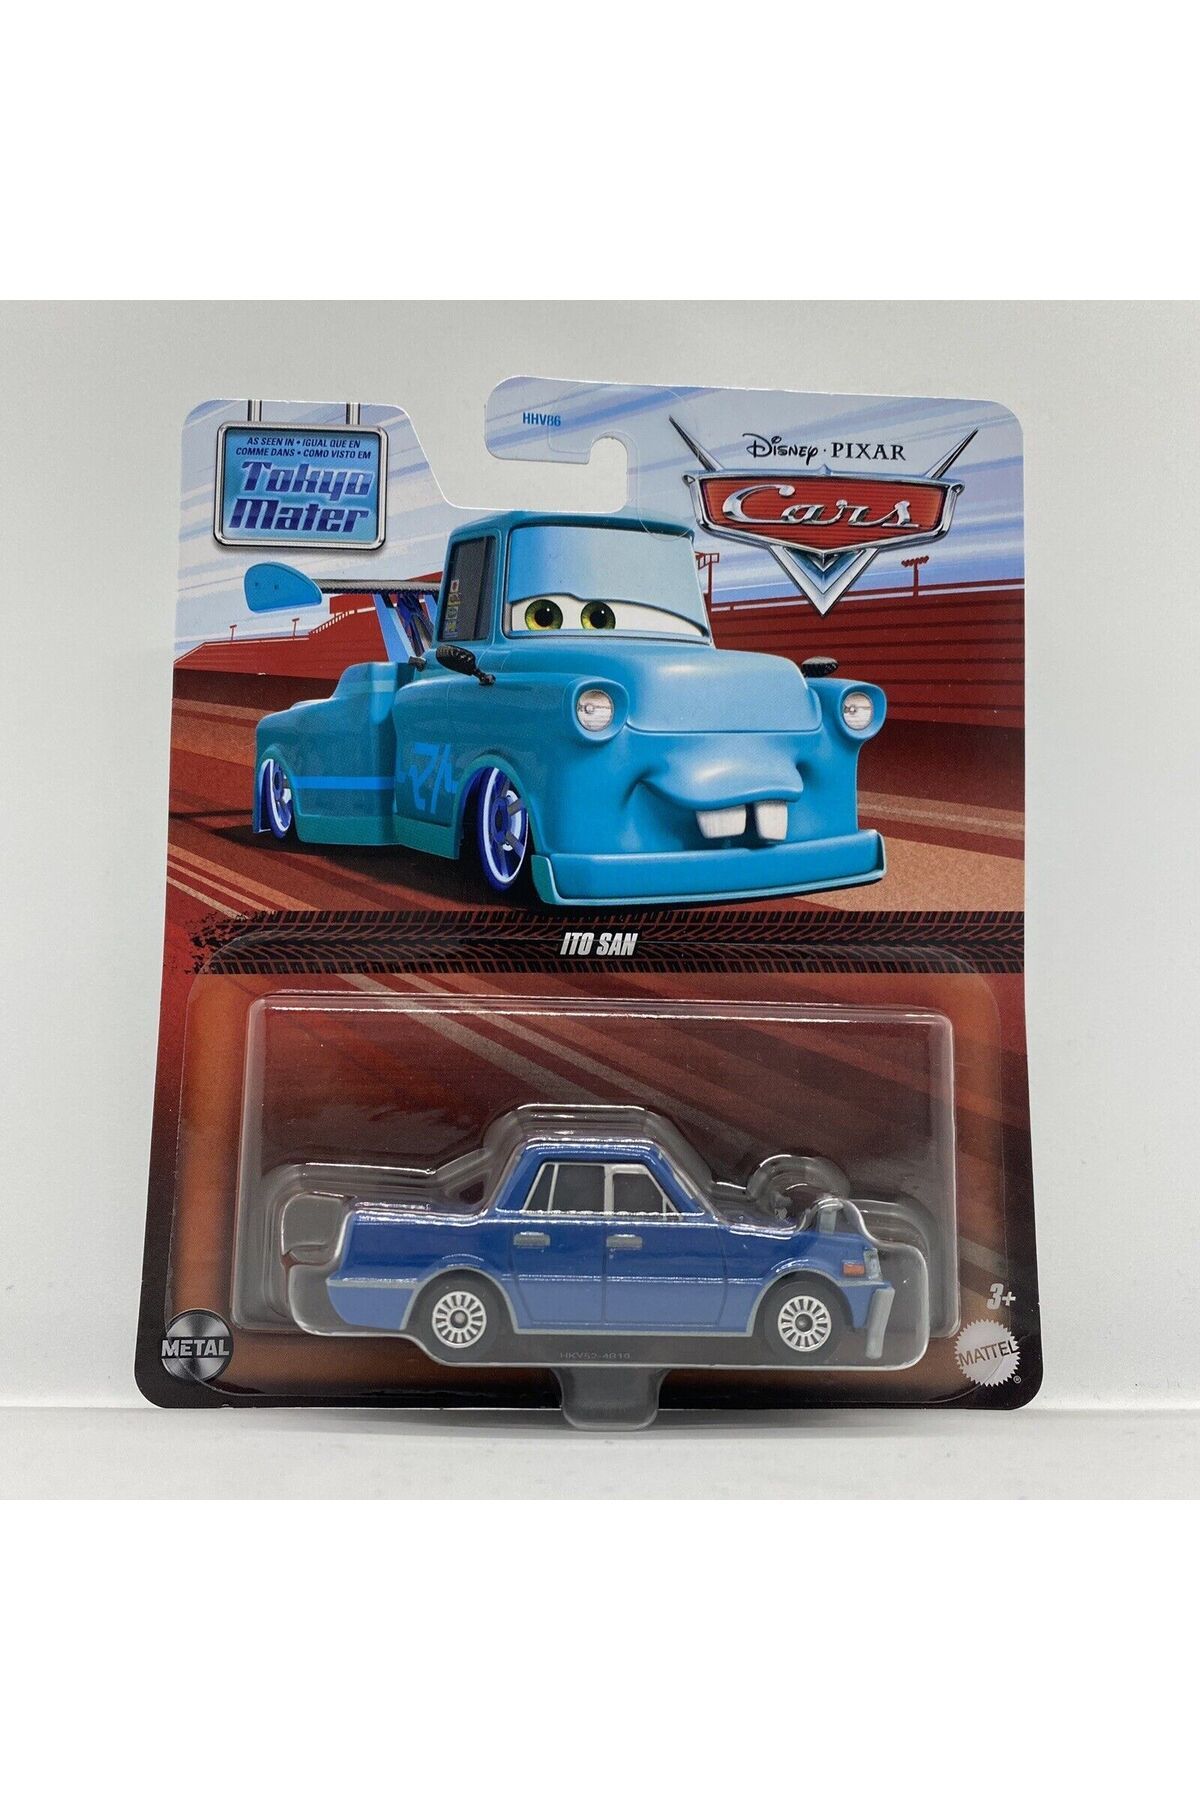 Cars Tekli Karakter Araçlar Disney Pixar Cars TOKYO MATER Serisi - ITO SAN 1:55 Ölçek Mattel